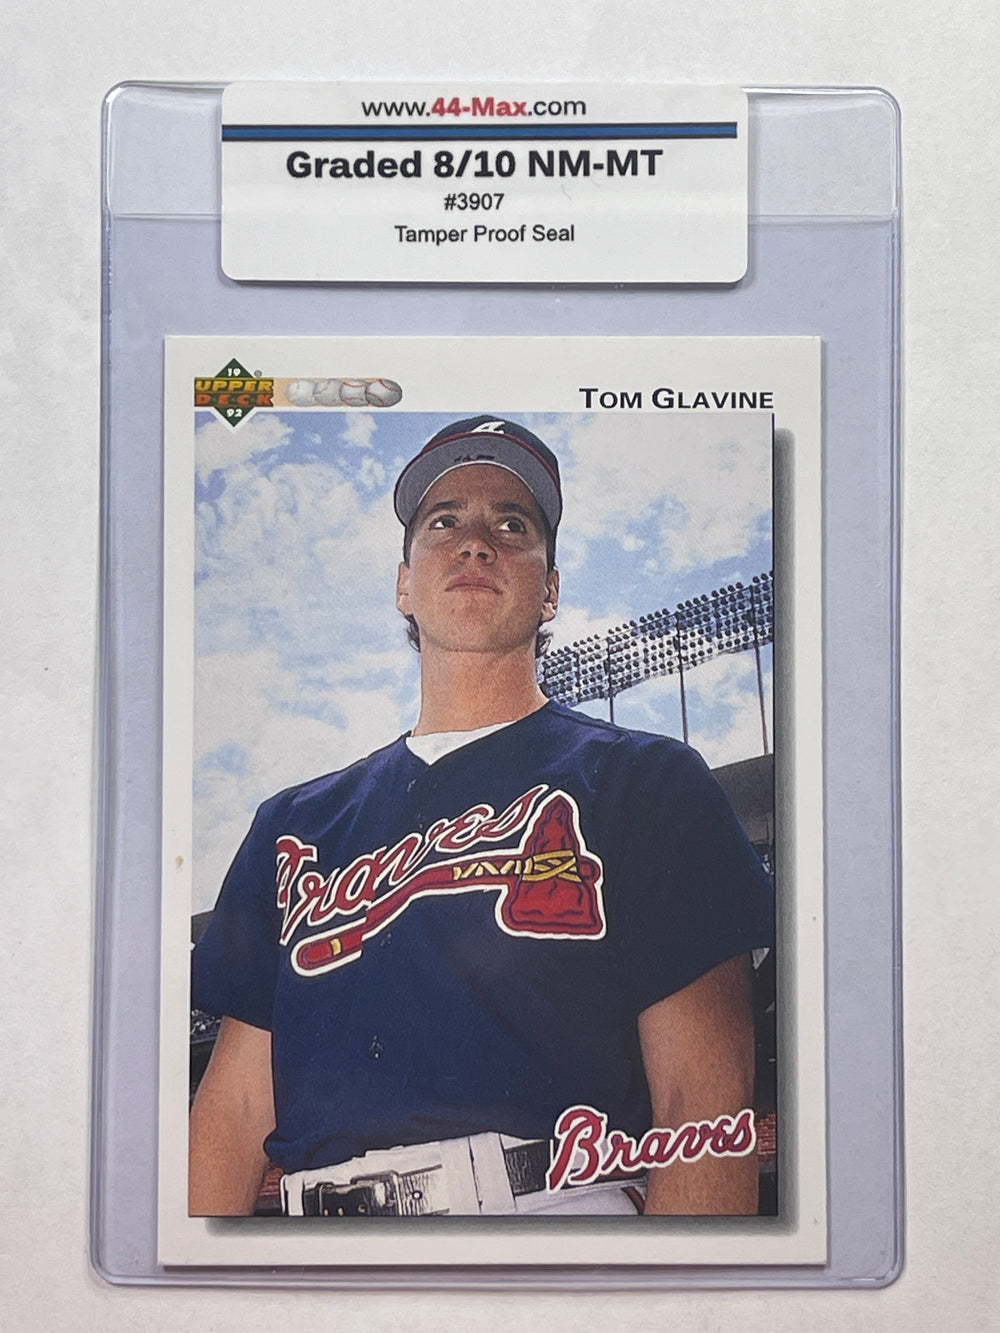 Tom Glavine 1992 Upper Deck Baseball Card. 44-Max 8/10 NM-MT #3907